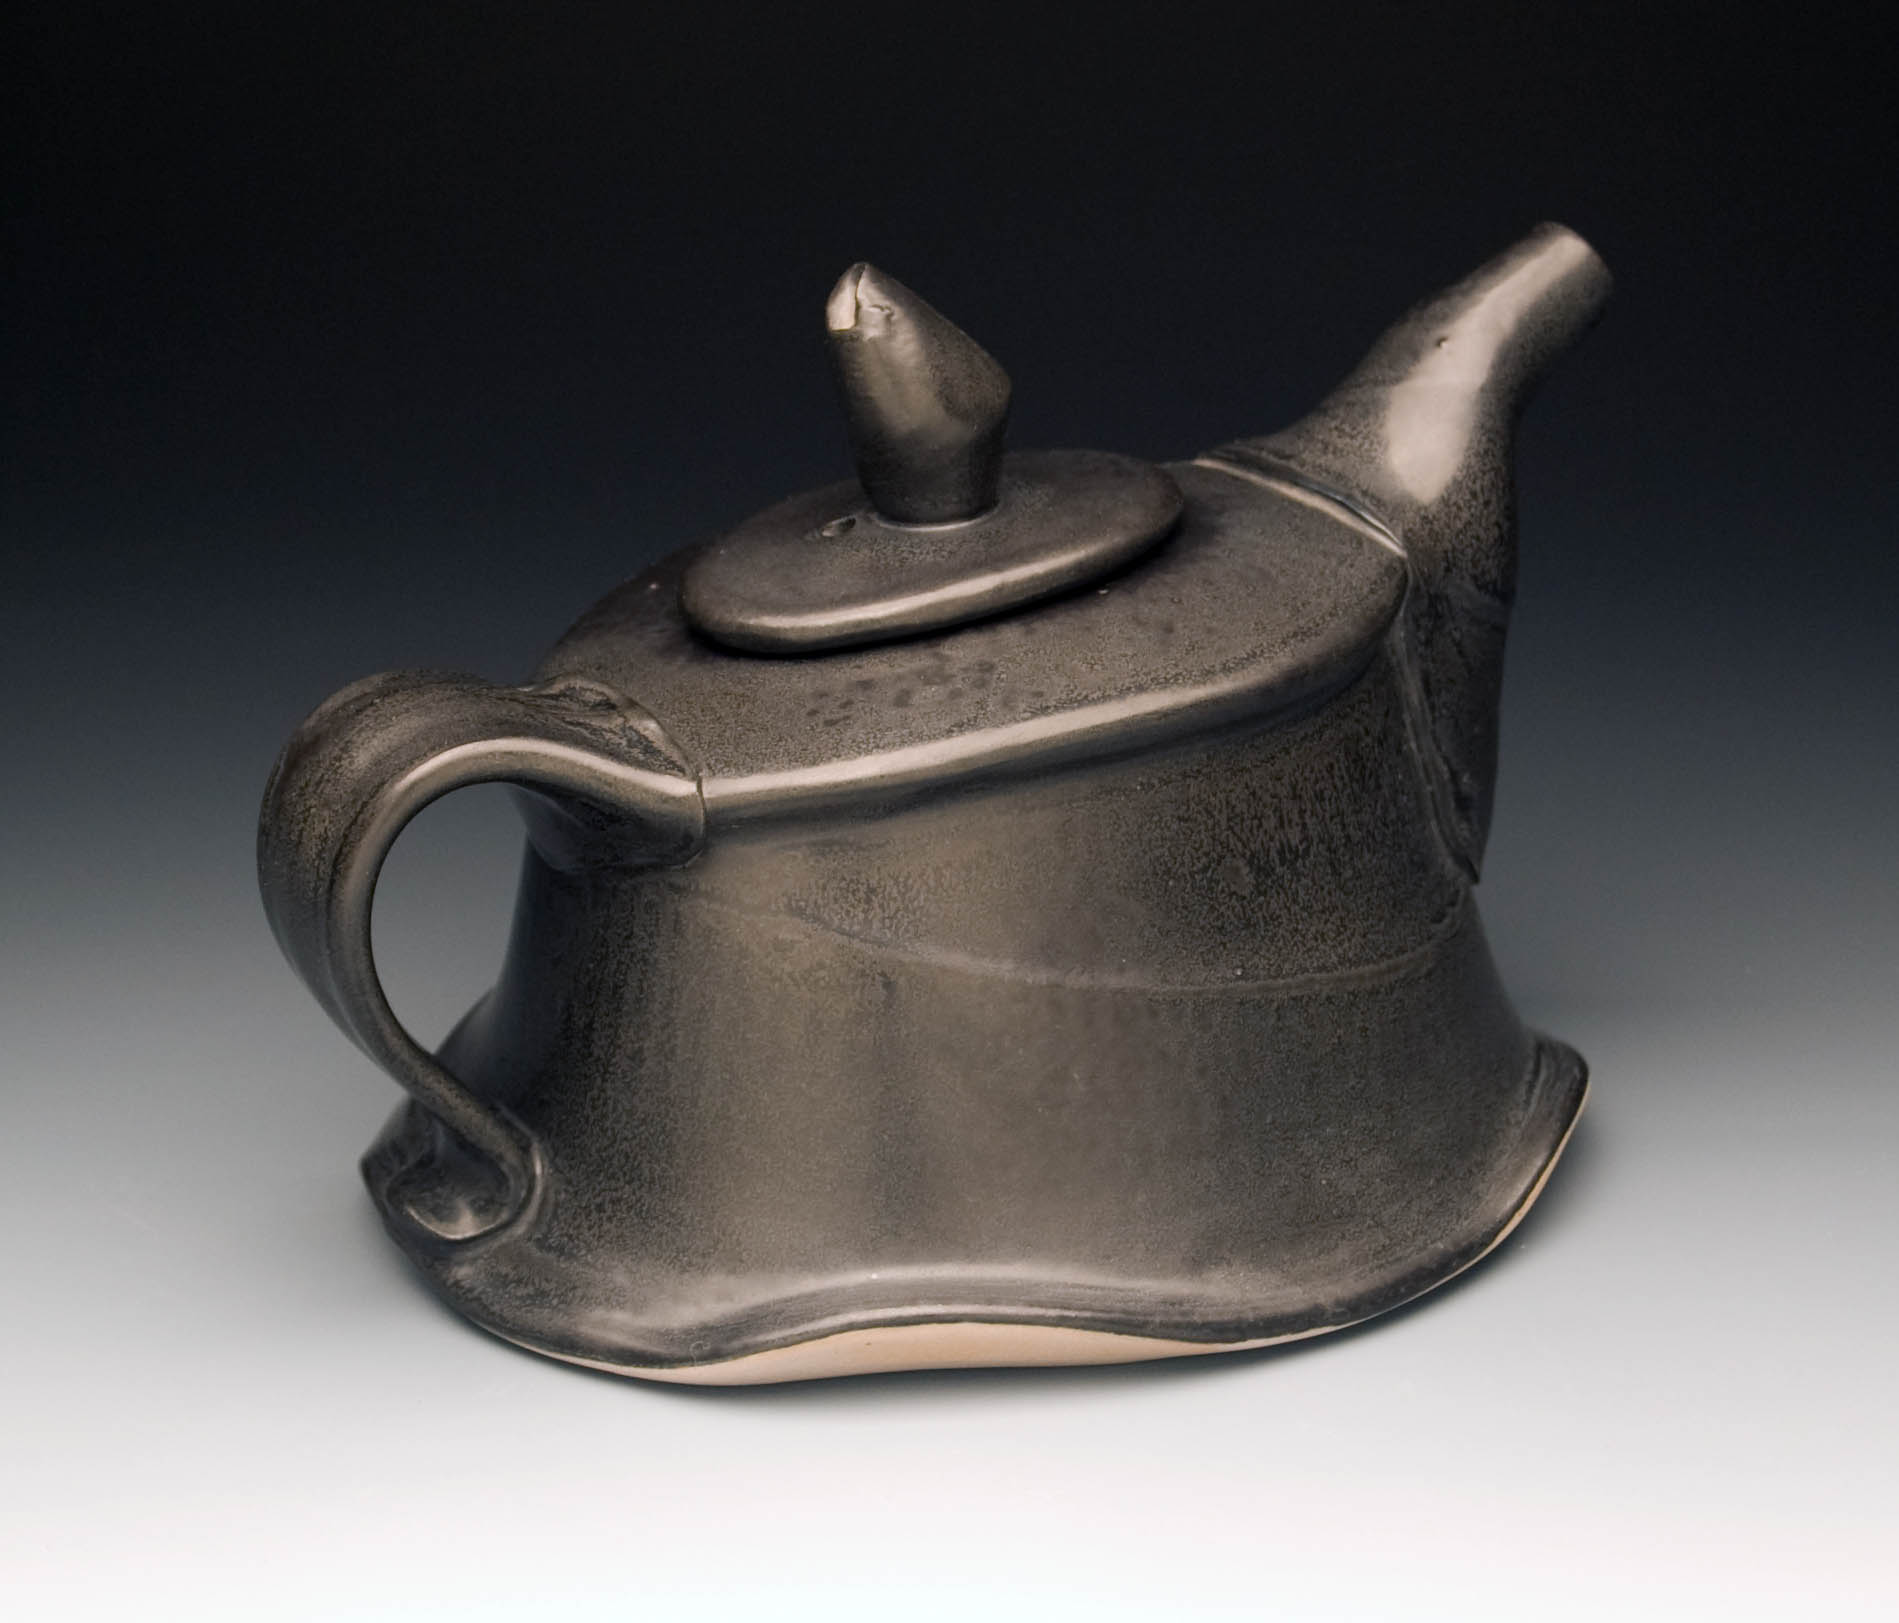 conner burns - black teapot